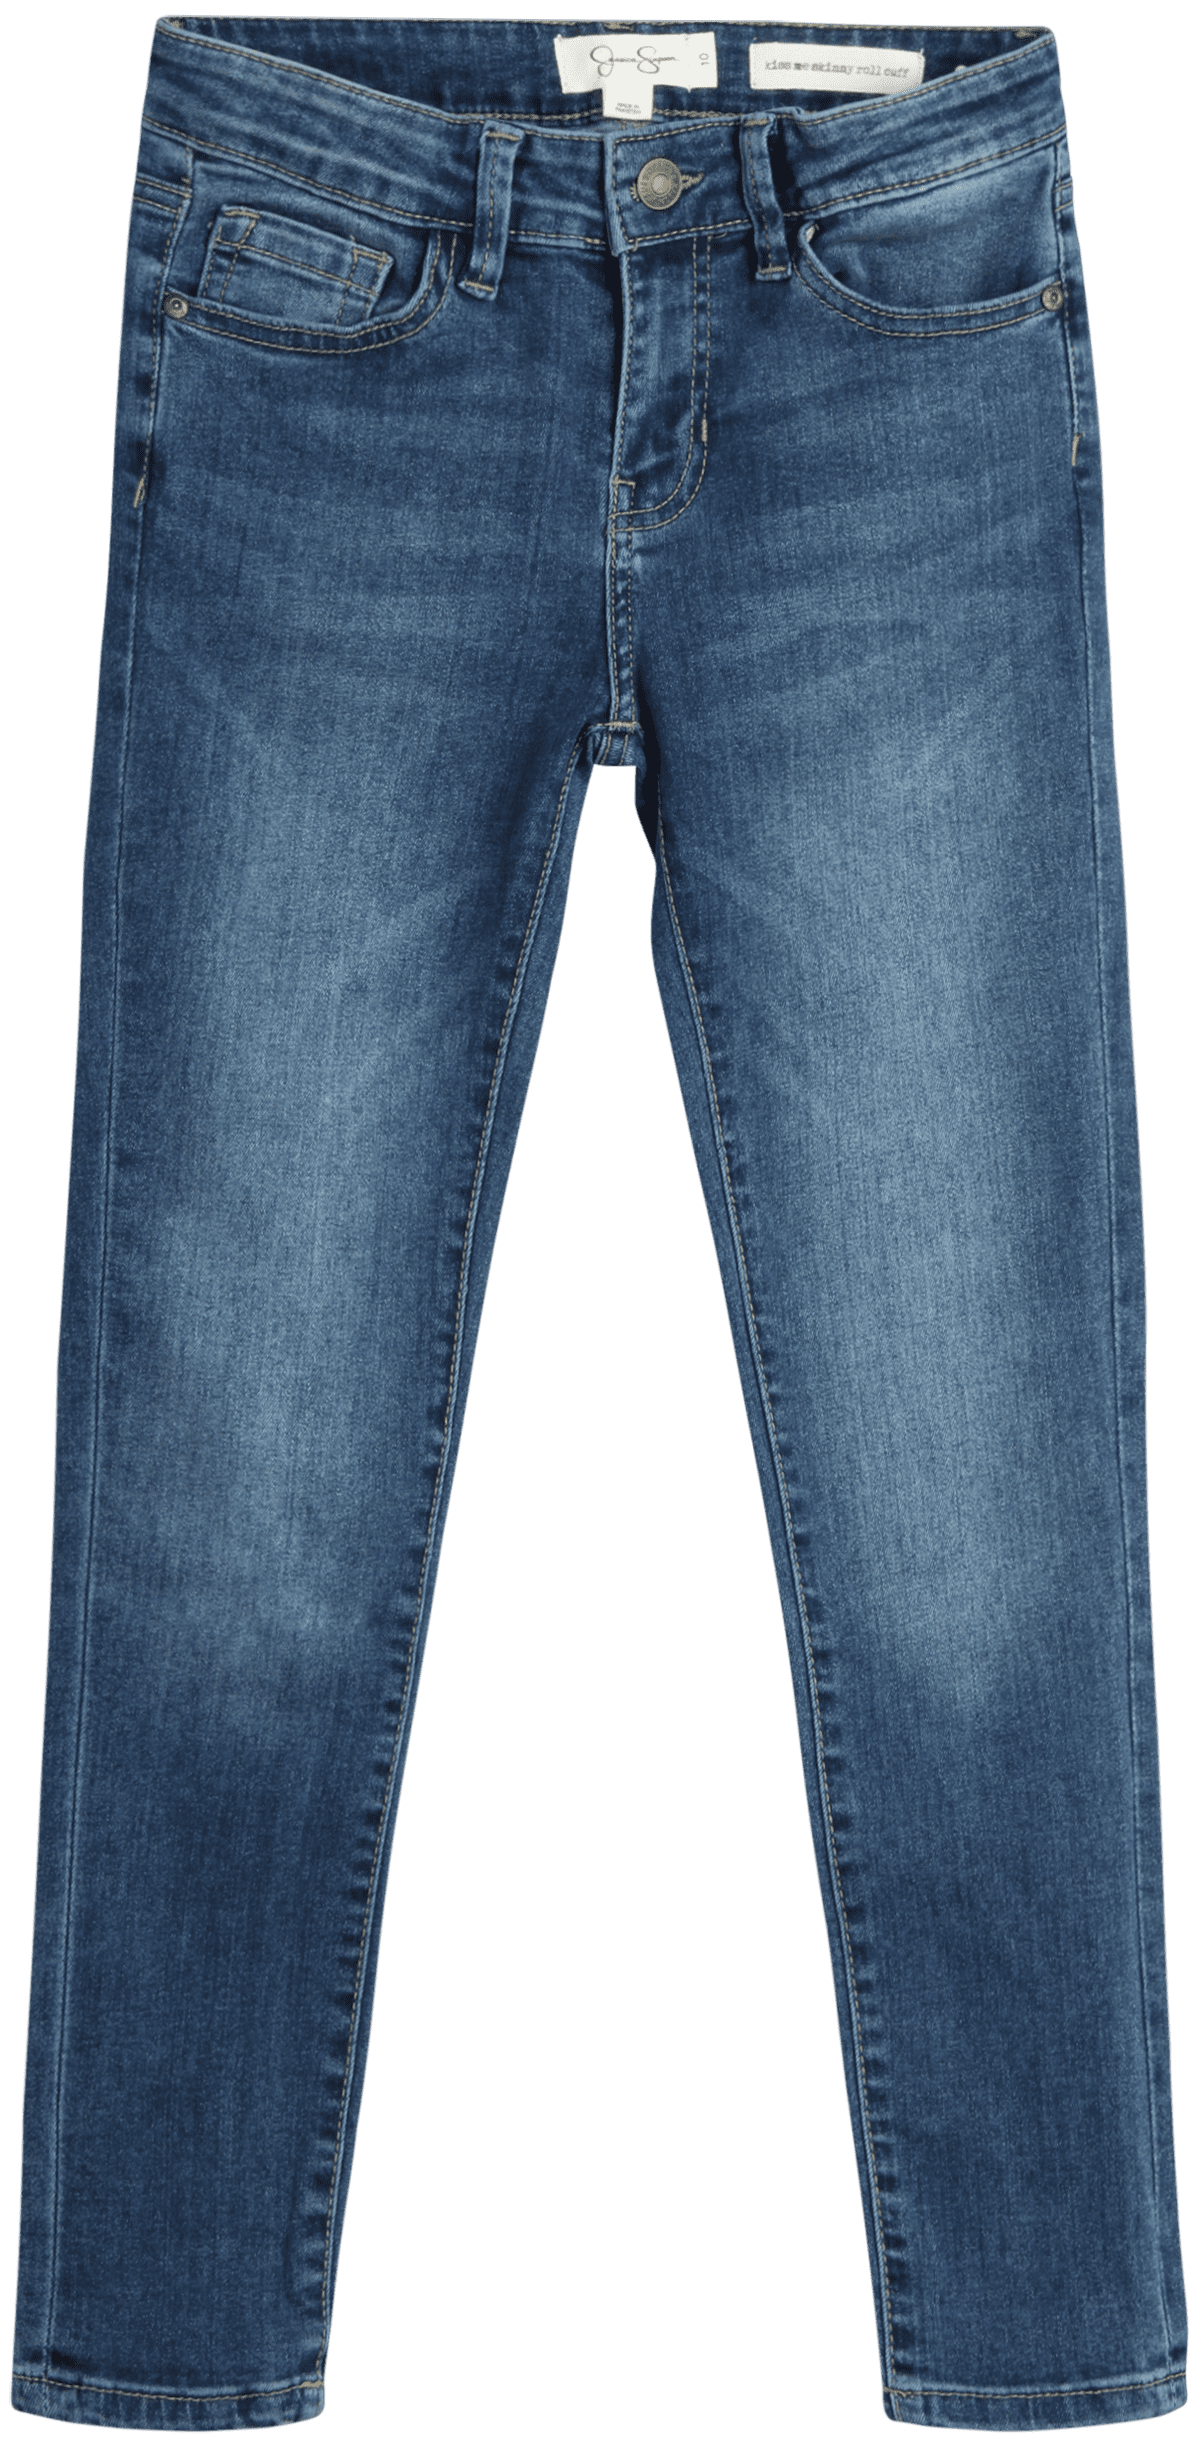 Jessica Simpson Girls' Jeans - Comfort Stretch Denim Skinny Jeans ...